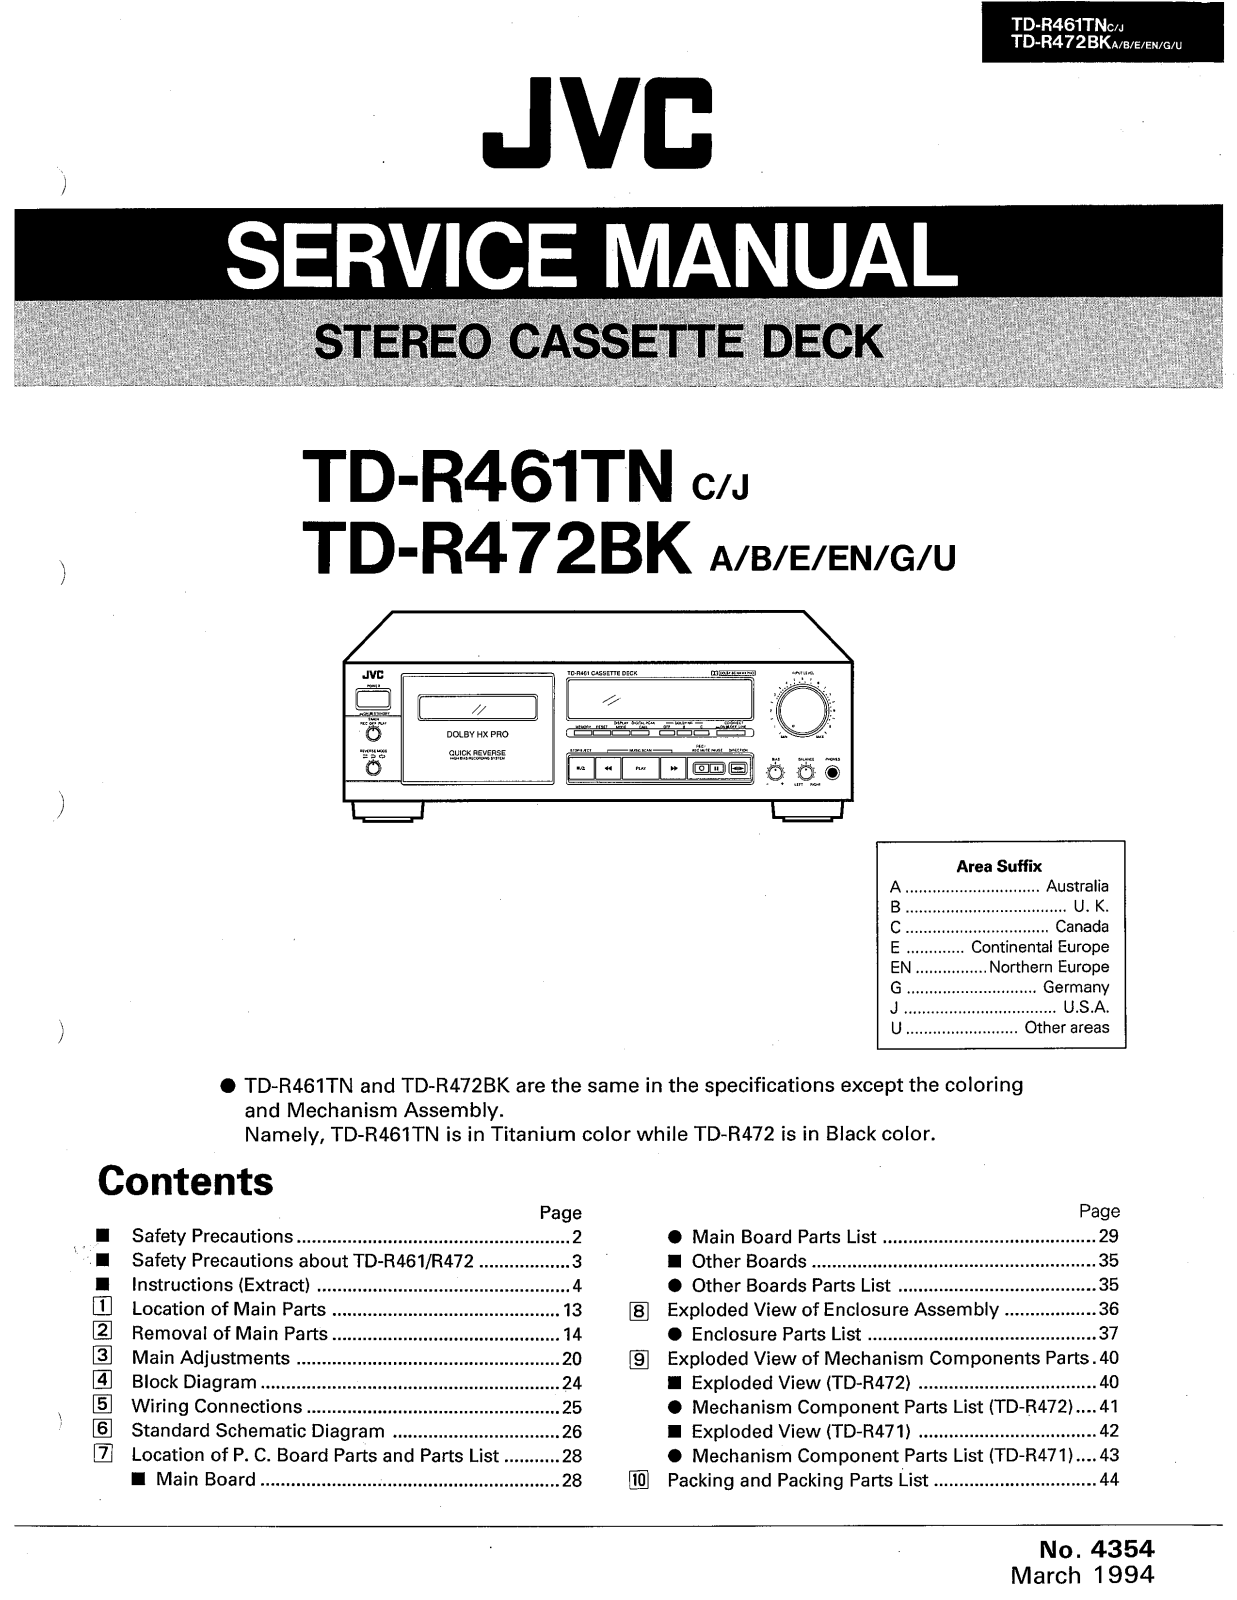 JVC TD-R461TNC, TD-R461TNJ, TD-R472BKB, TD-R472BKE, TD-R472BKEN Service Manual